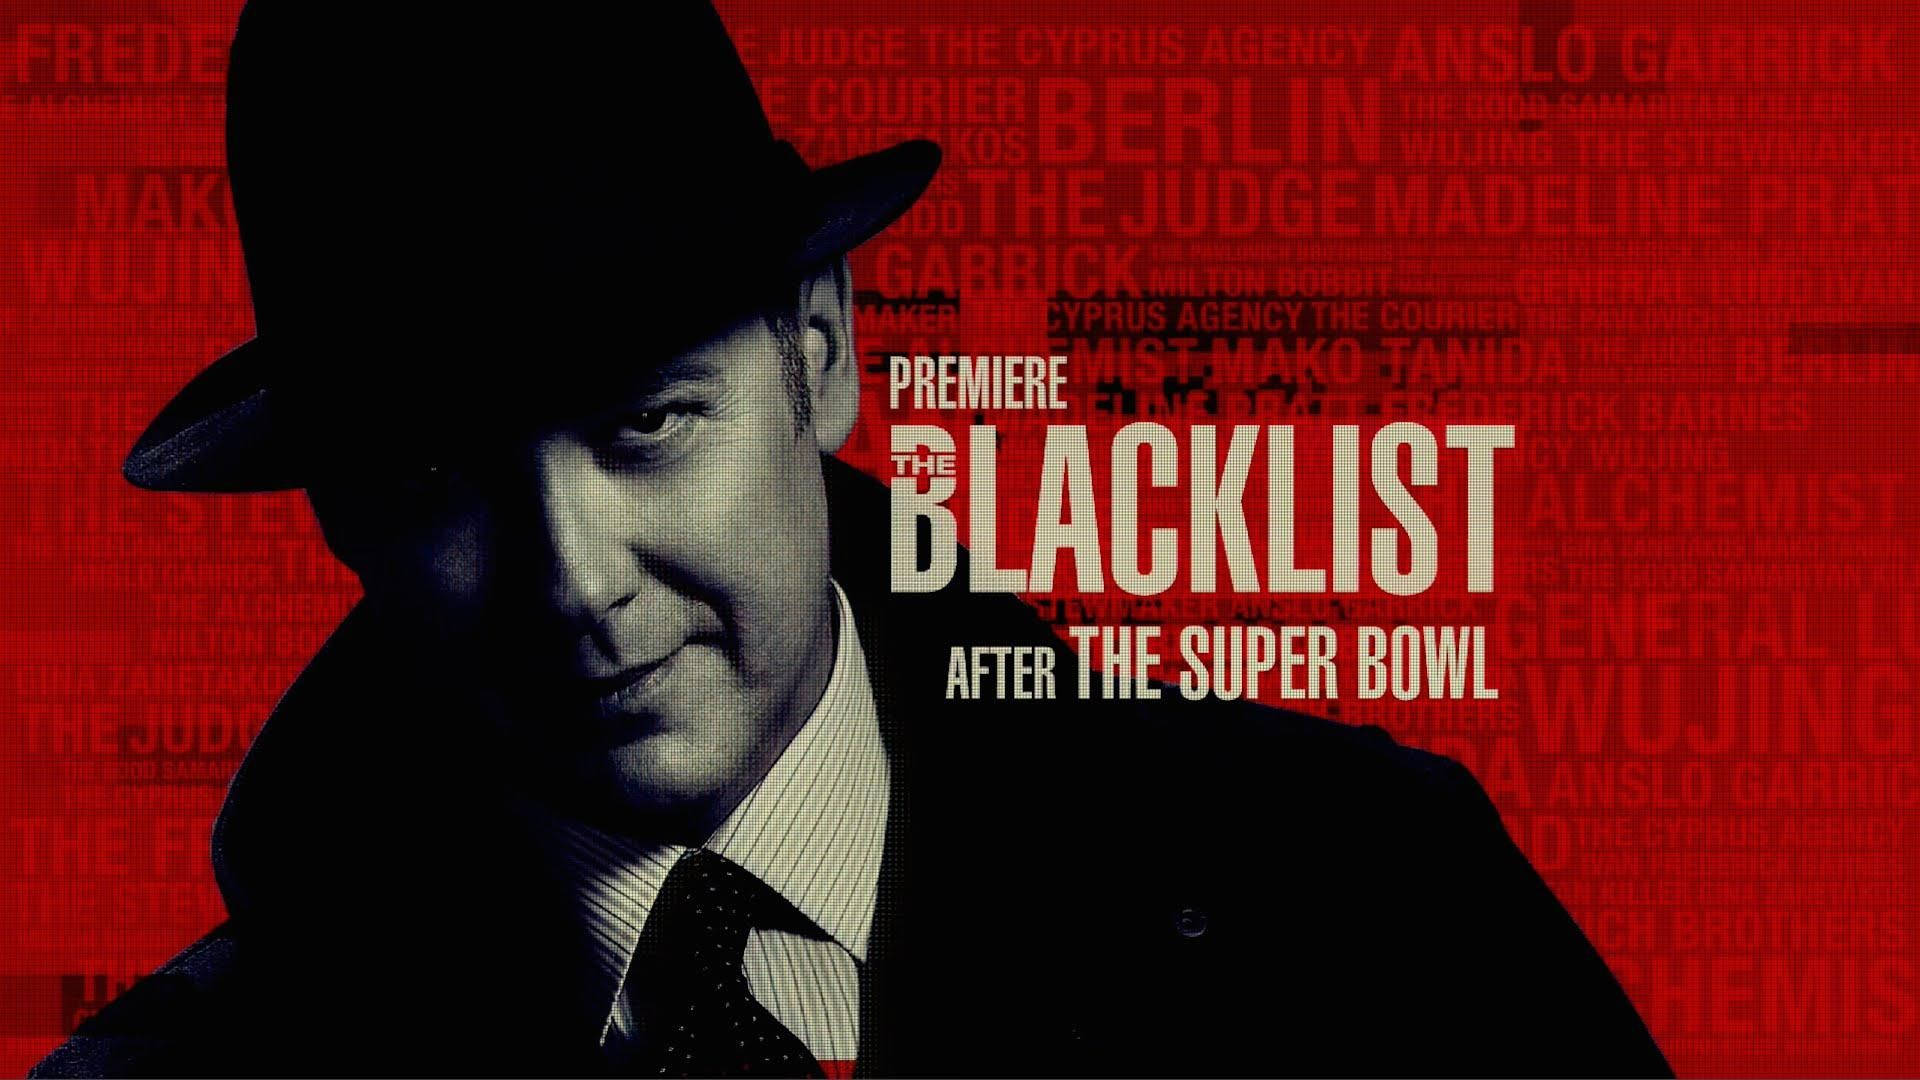 Raymond Reddington - Don't Trust The Mystery Background